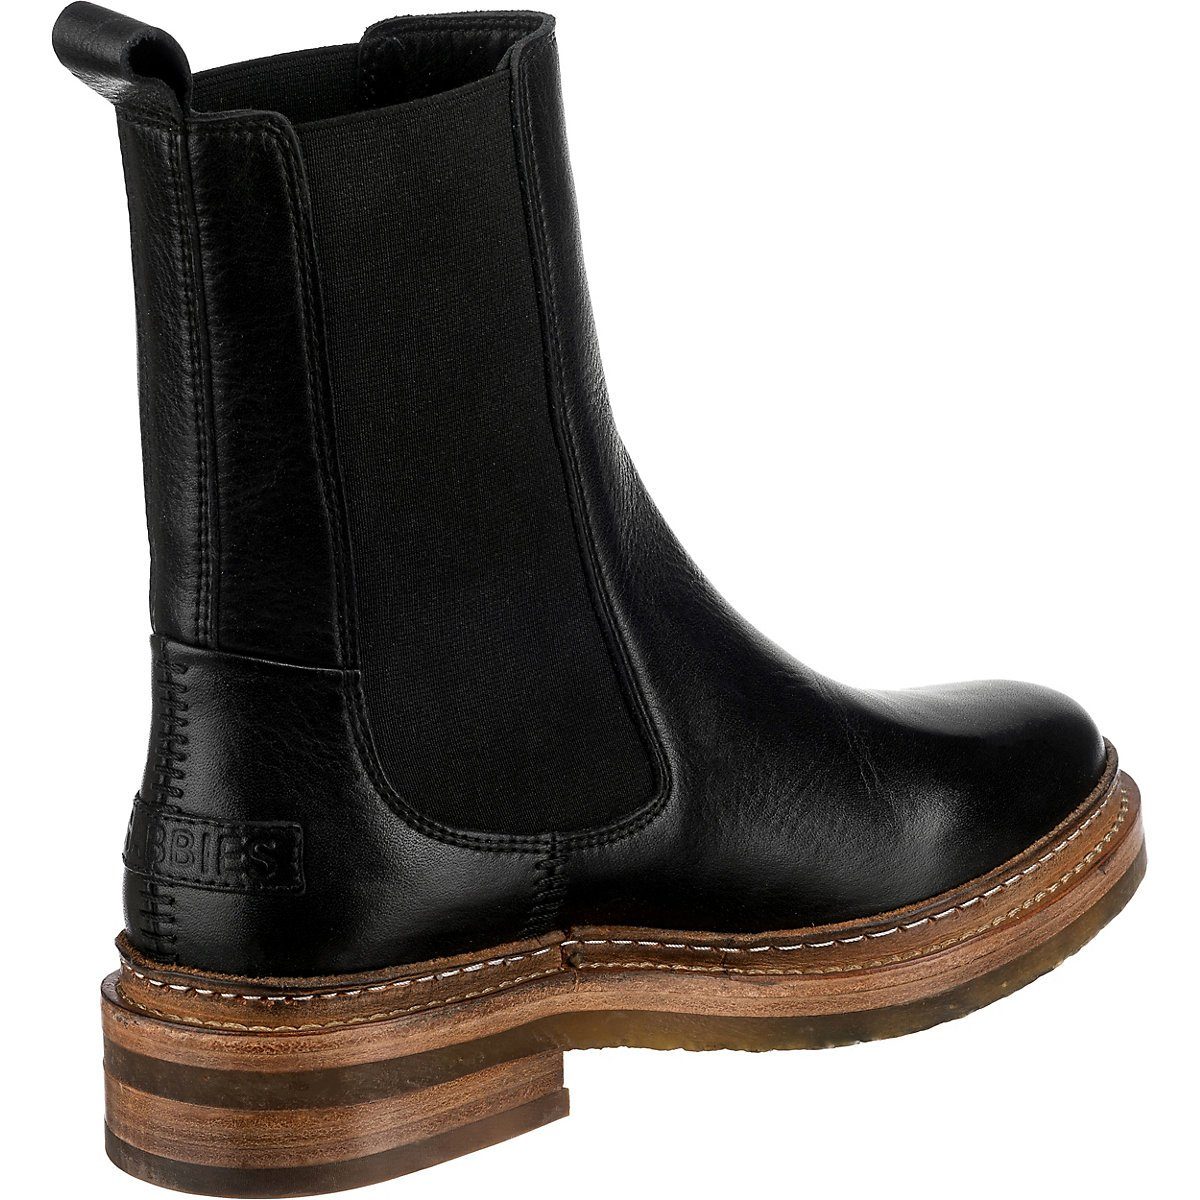 Schuhe Boots Shabbies Amsterdam Shs0995 Chelsea Boot Waxed Leather Chelsea Boots Chelseaboots